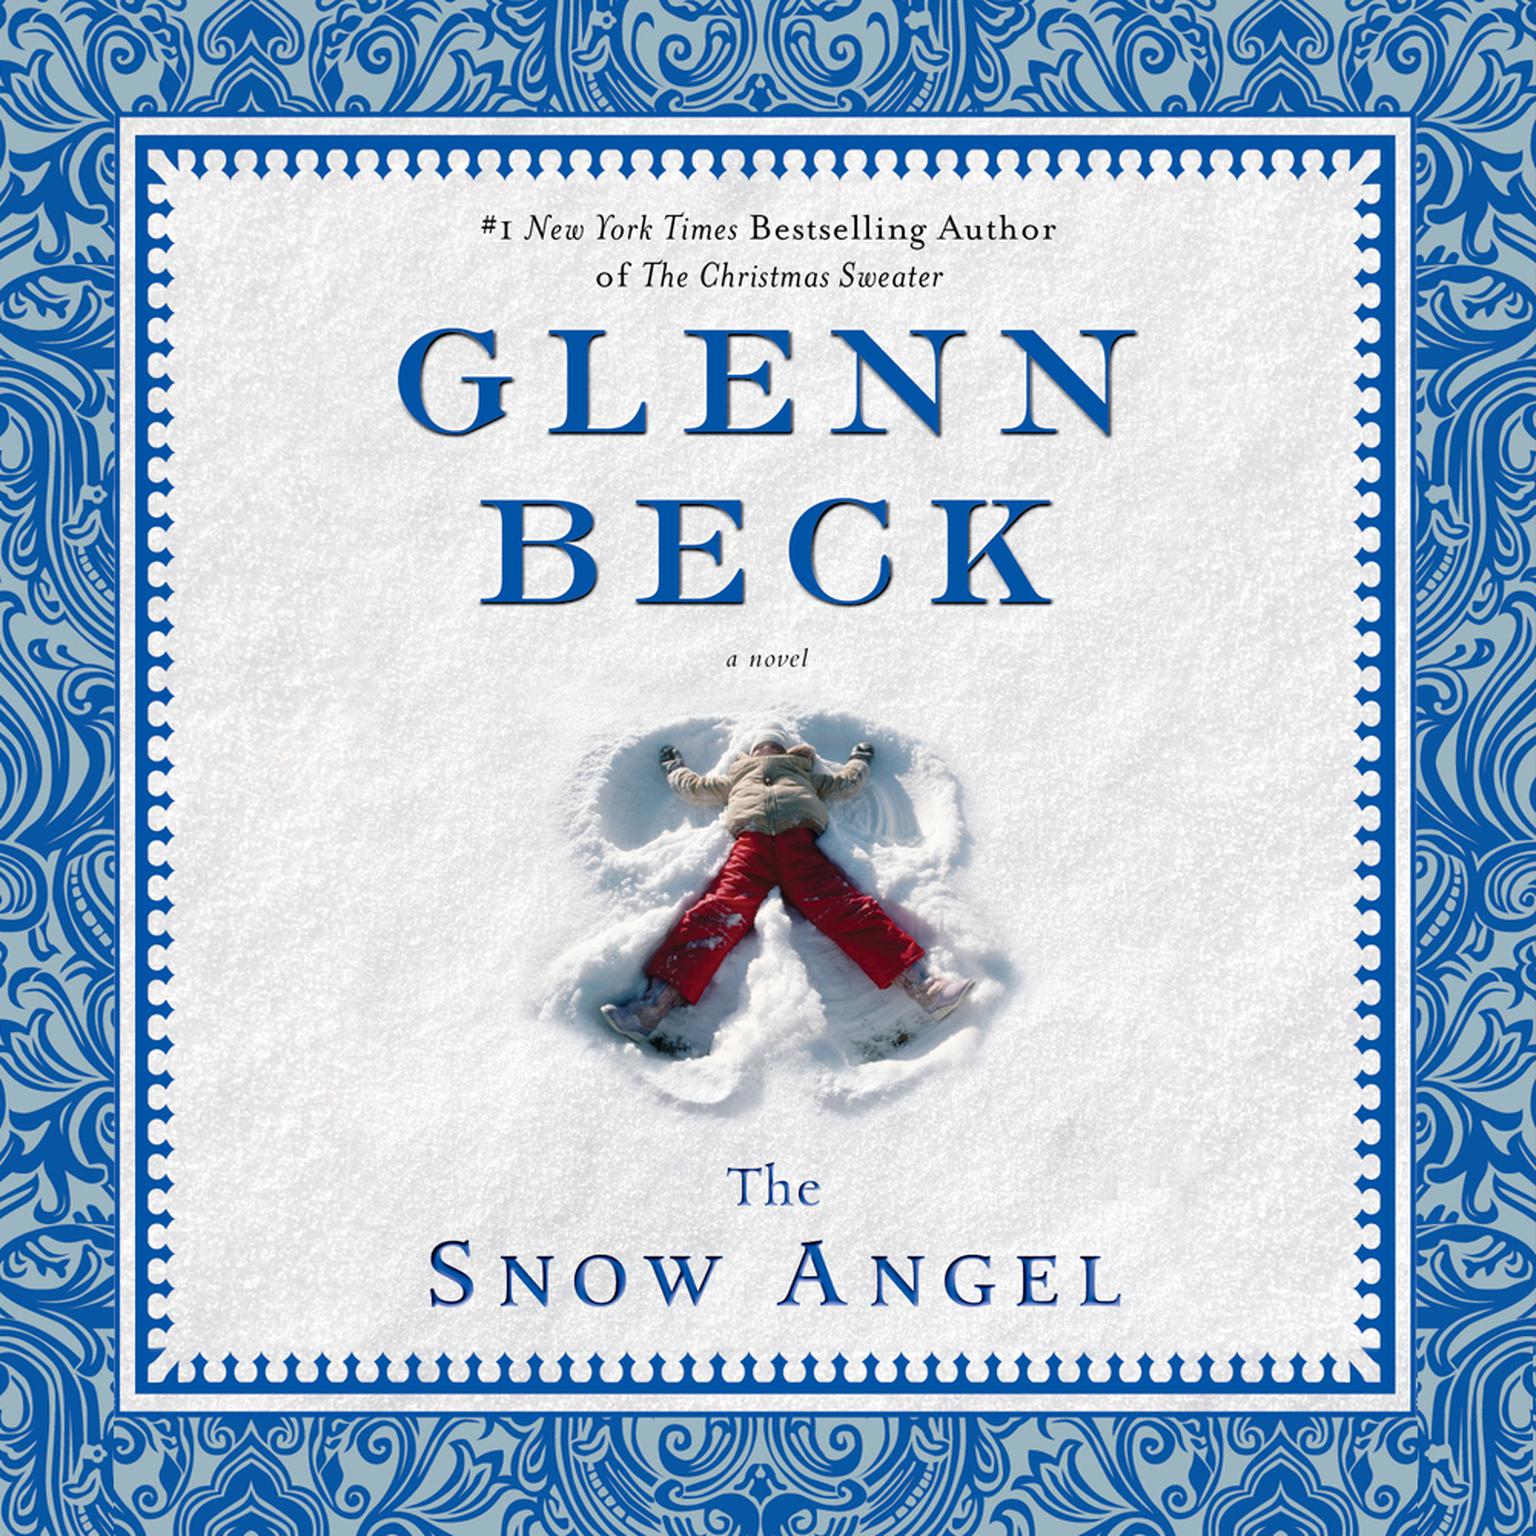 The Snow Angel Audiobook, by Glenn Beck